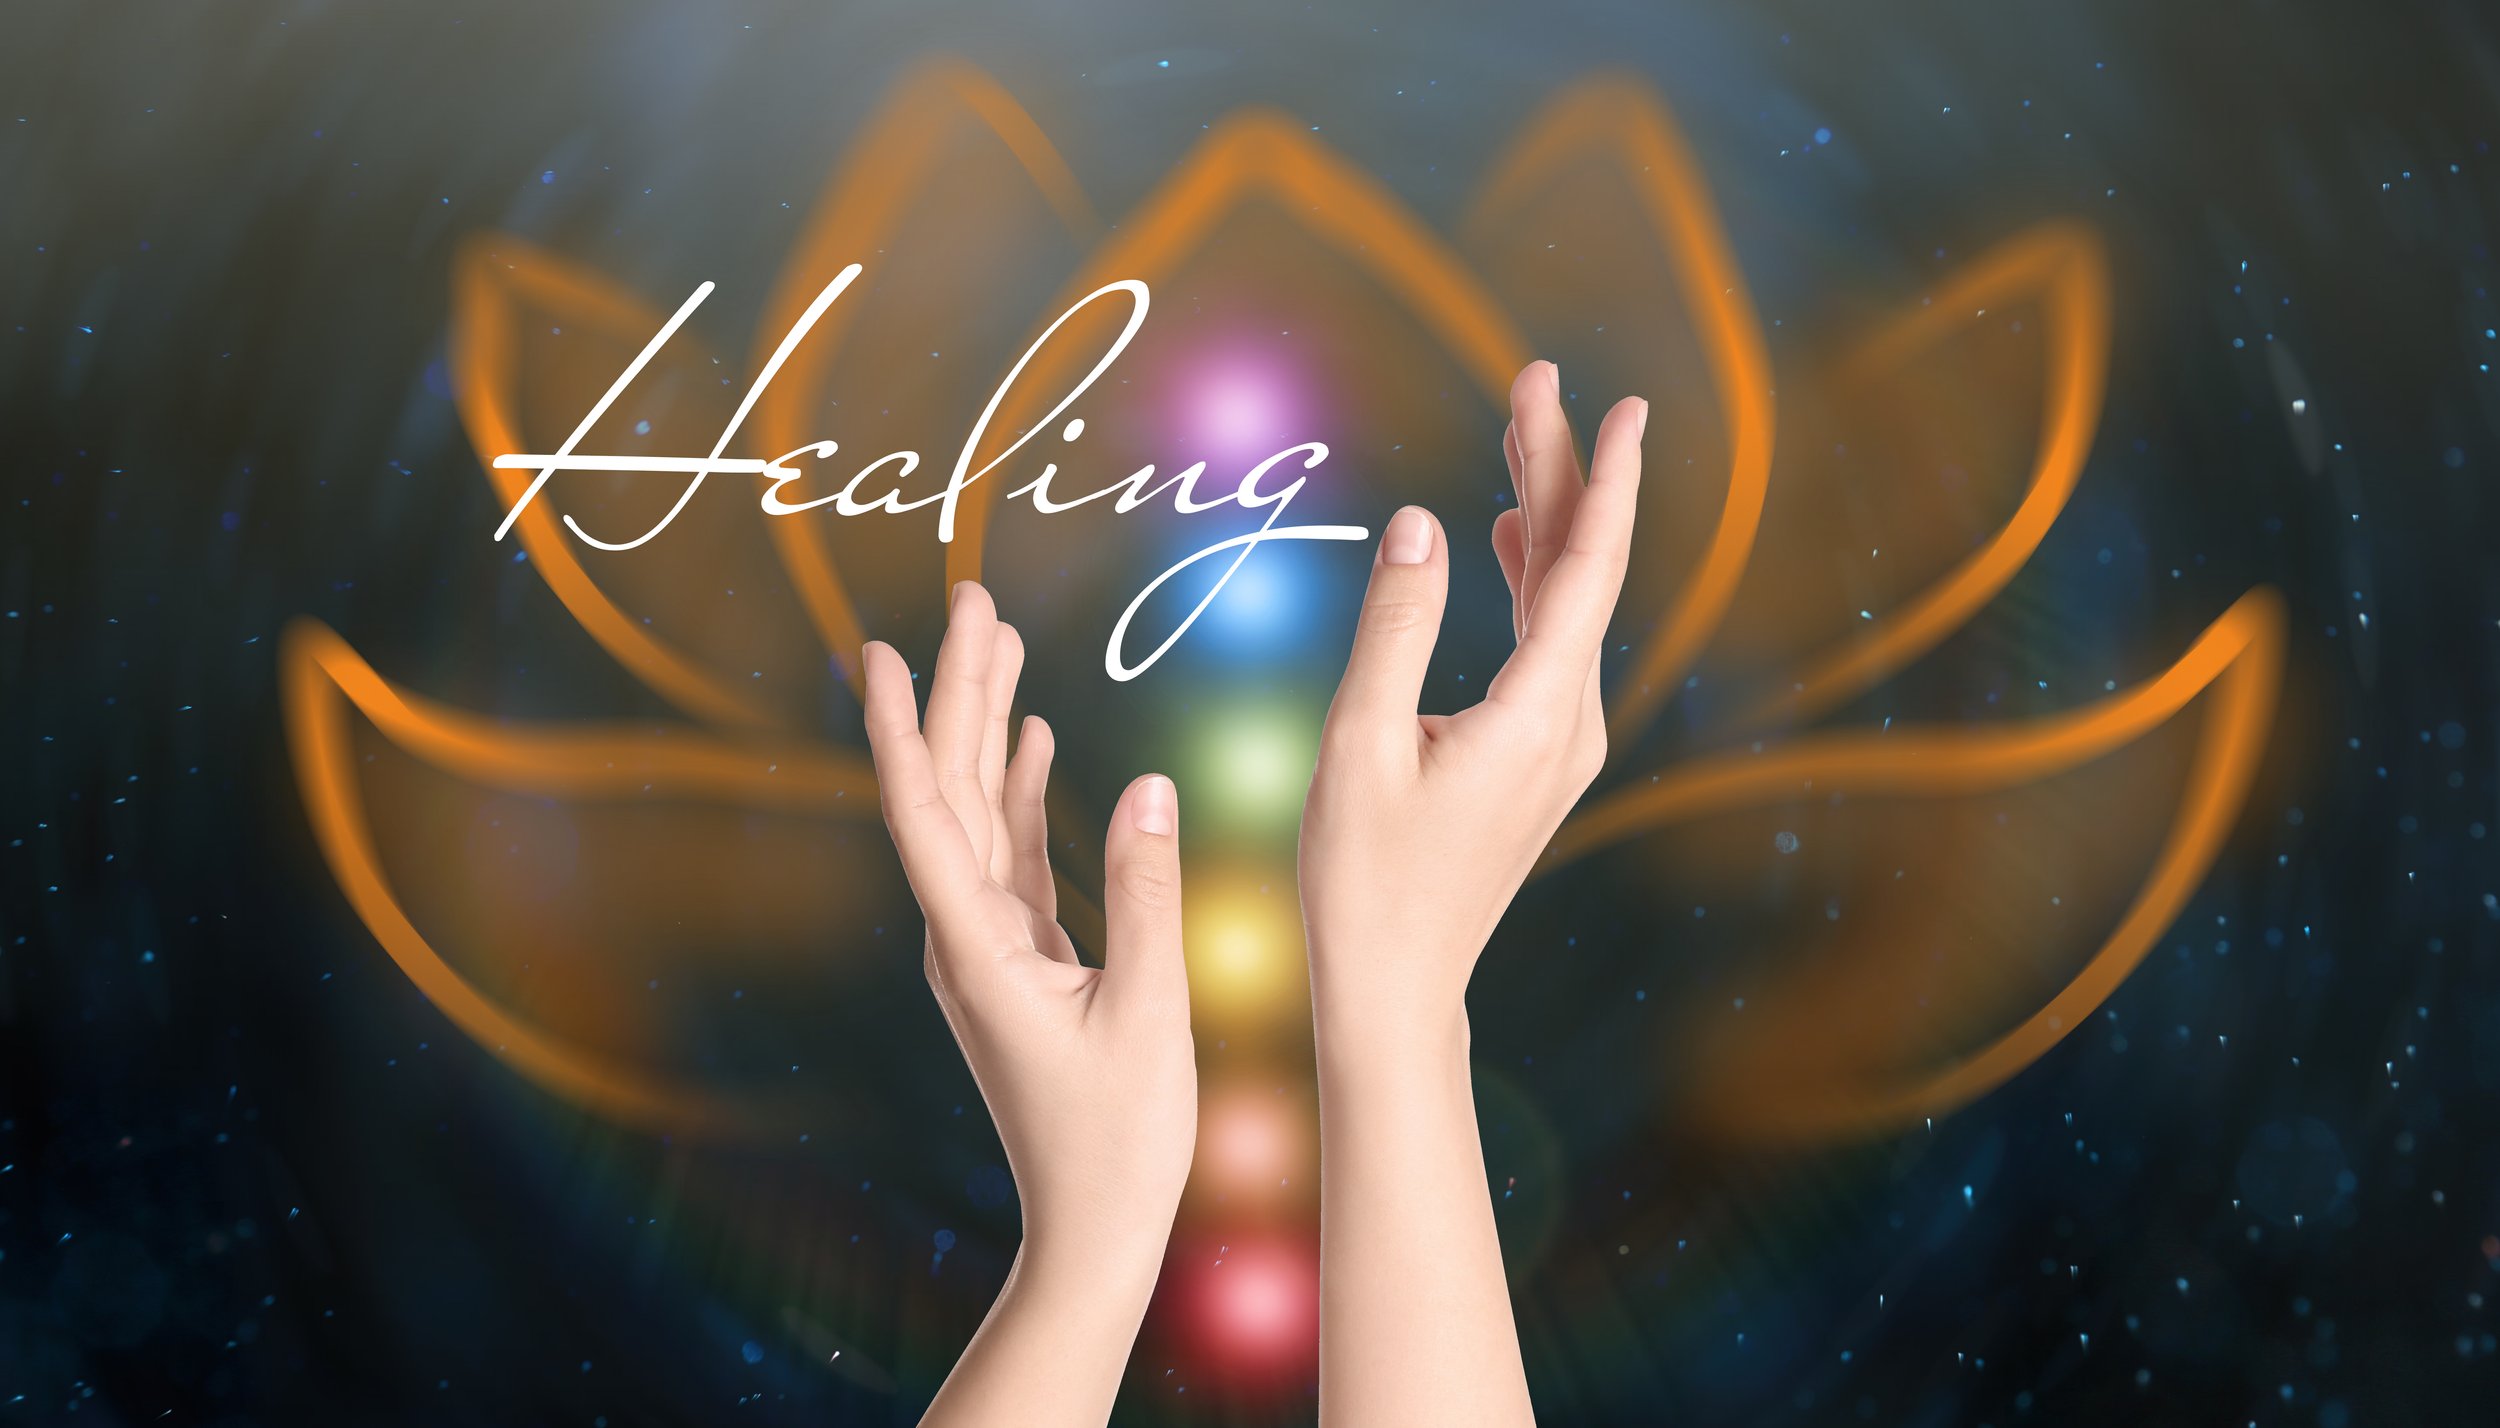 Healing Hands - Lifestyle Media